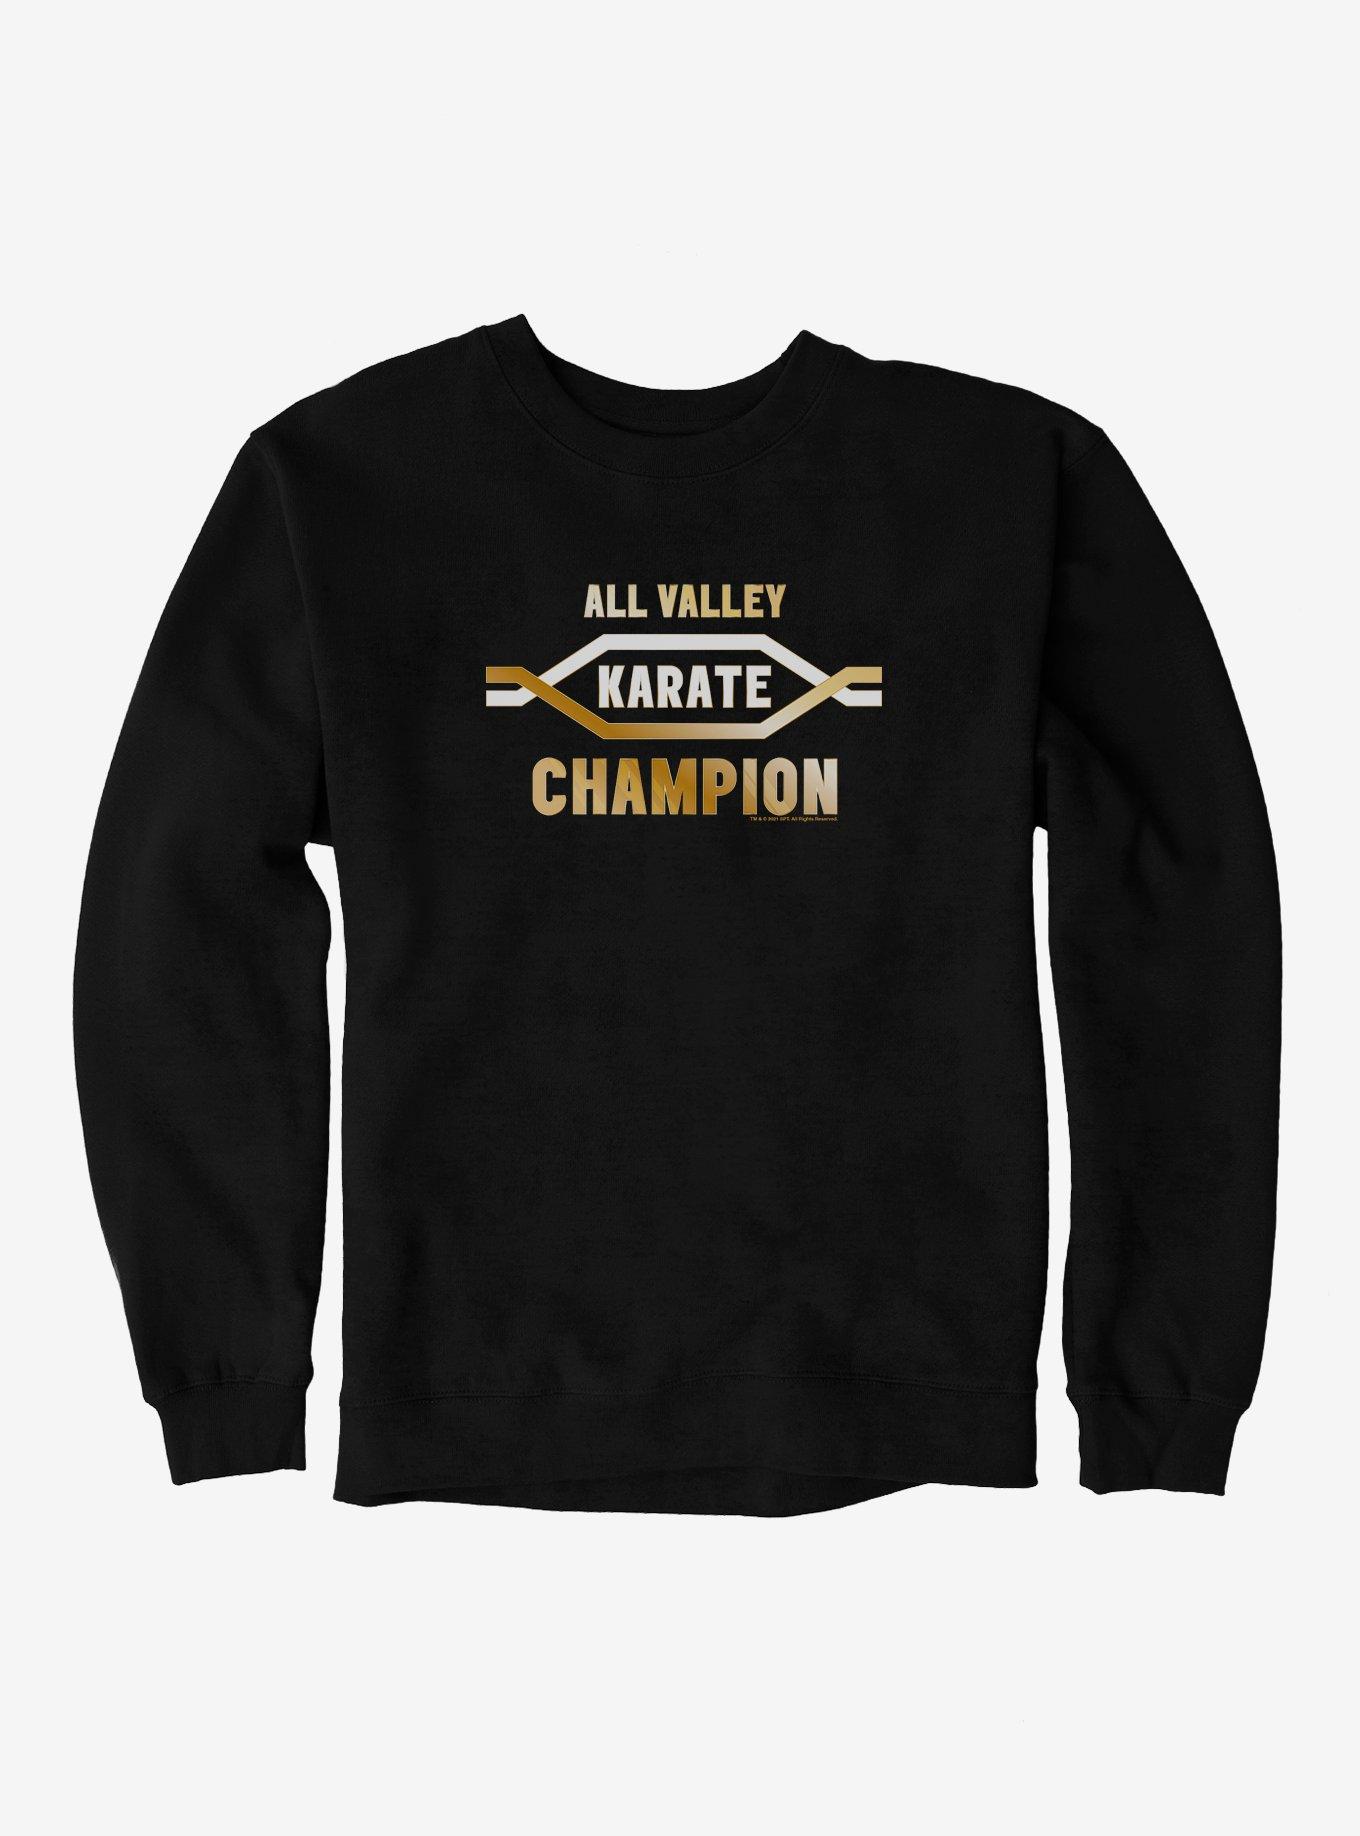 Cobra Kai Karate Champion Sweatshirt